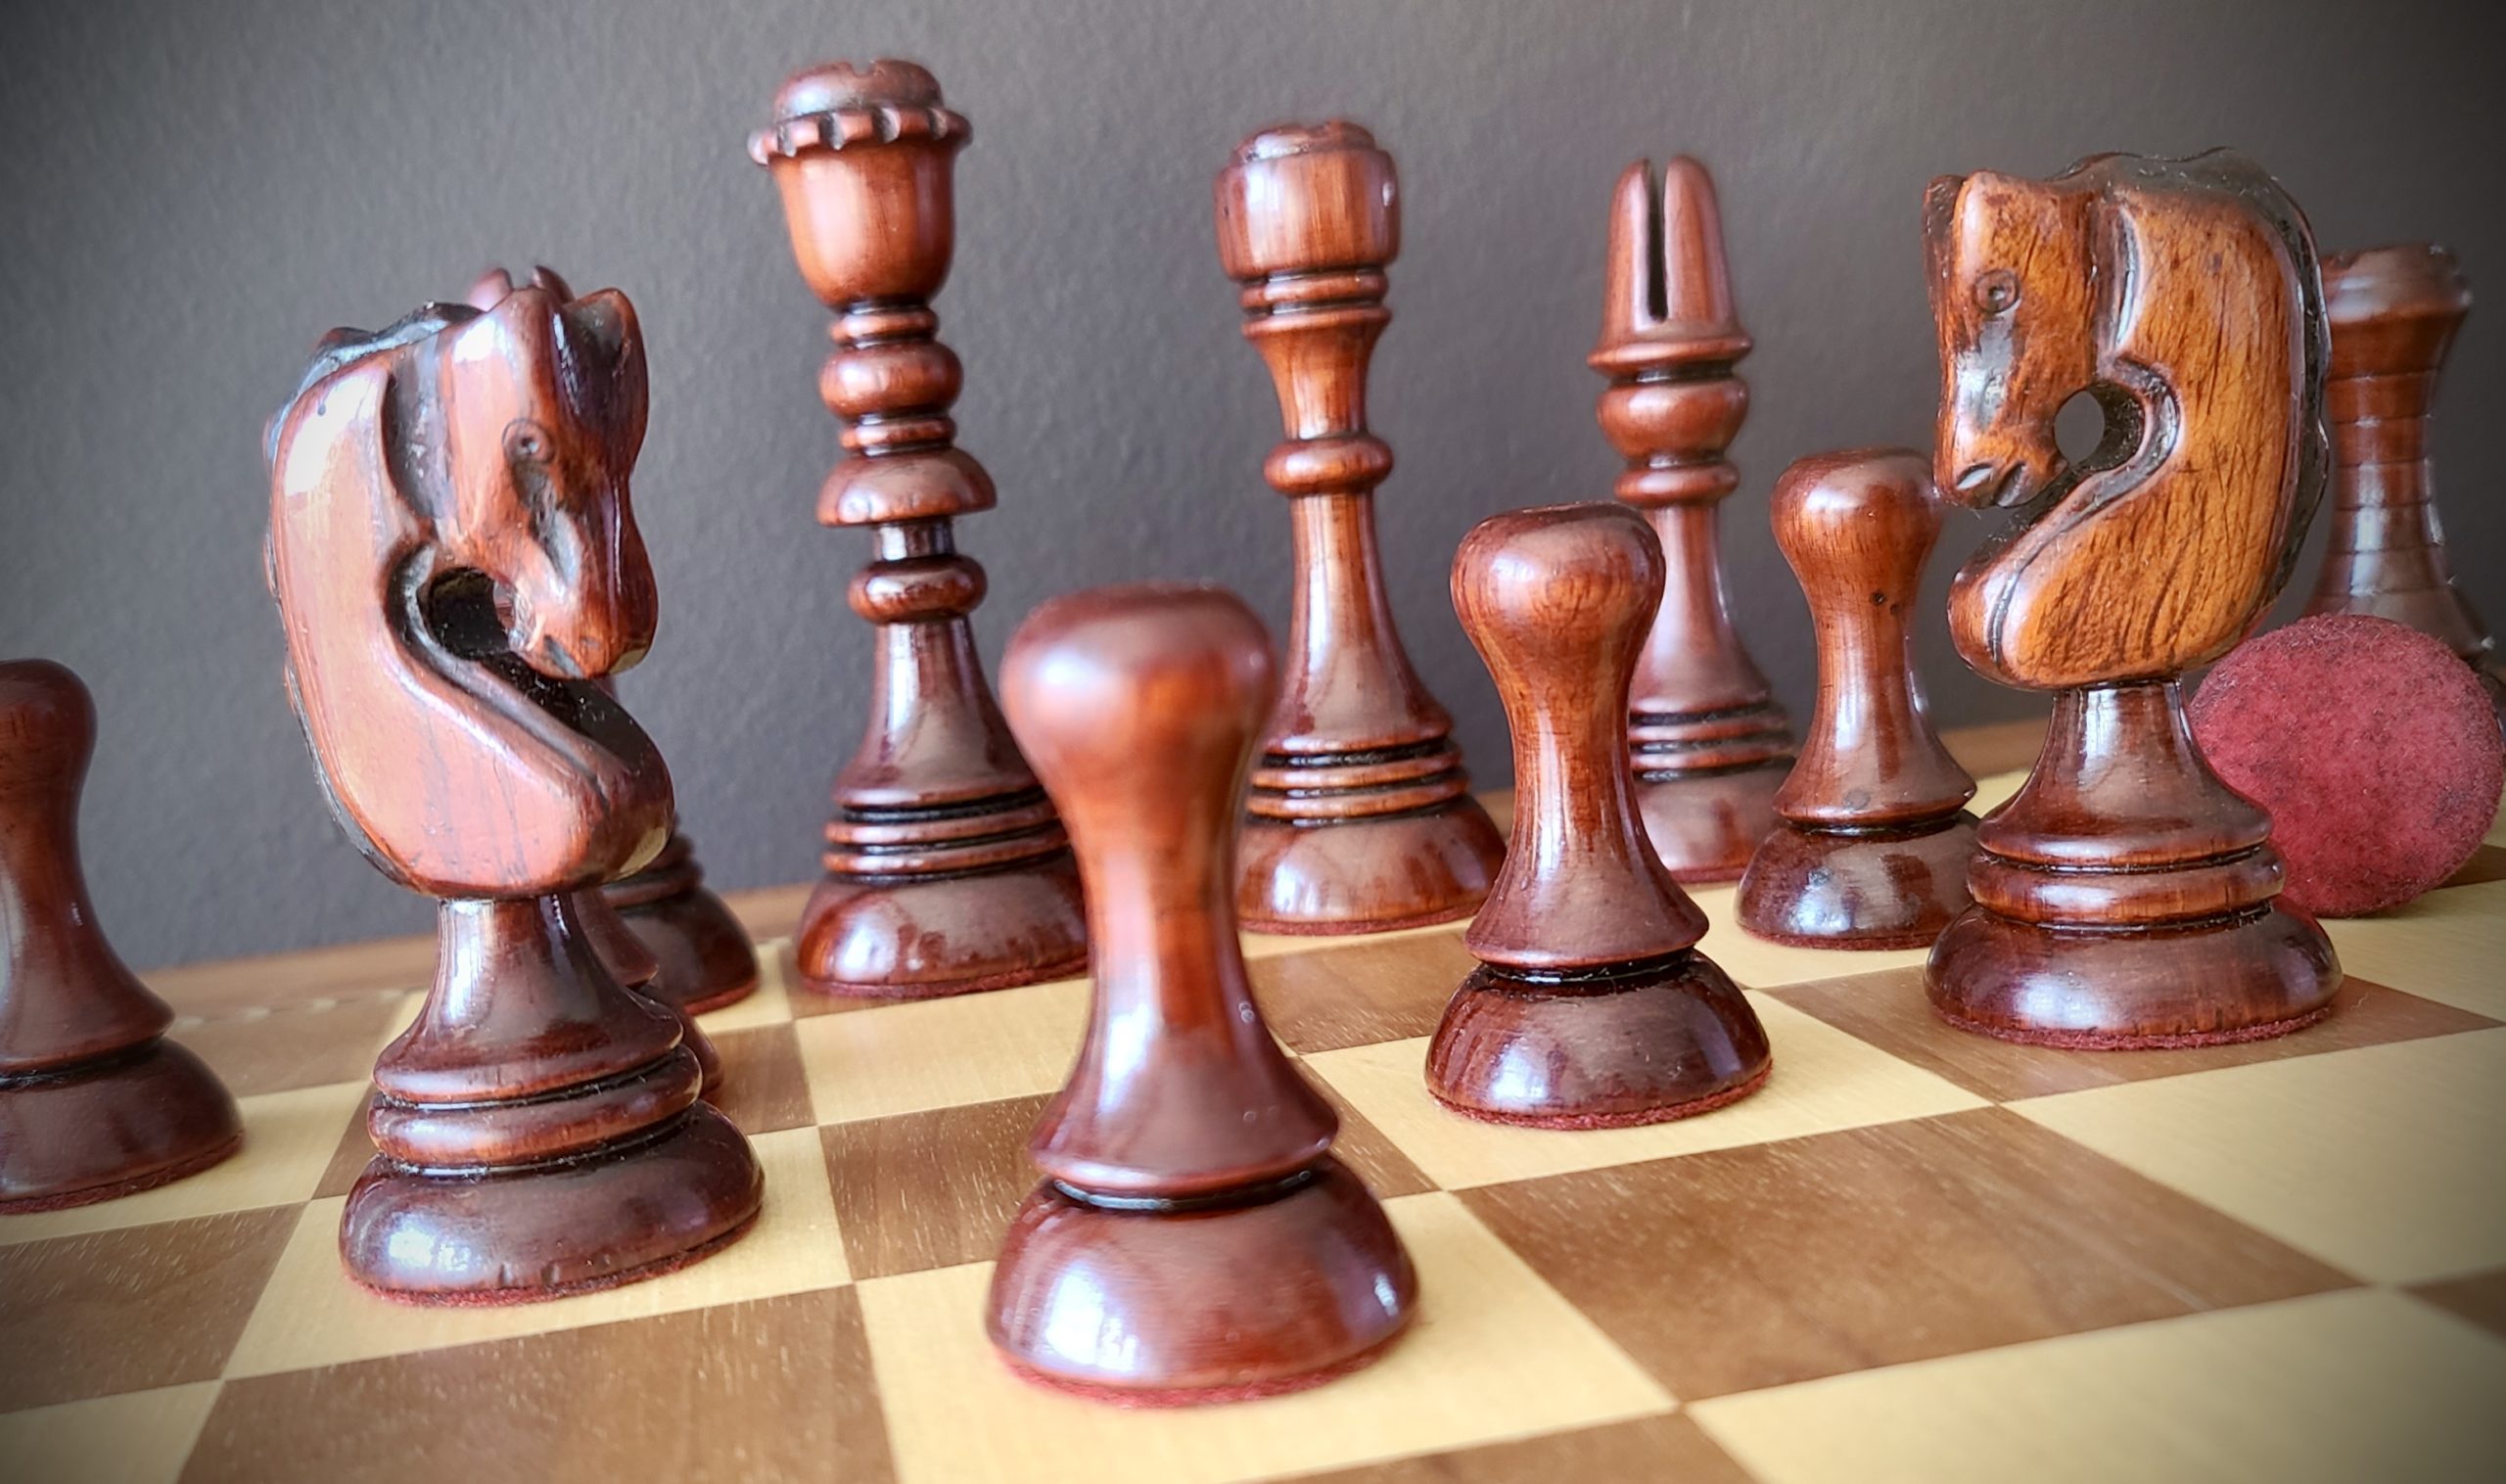 II Bom Jesus Chess Open - Jaehrig Xadrez